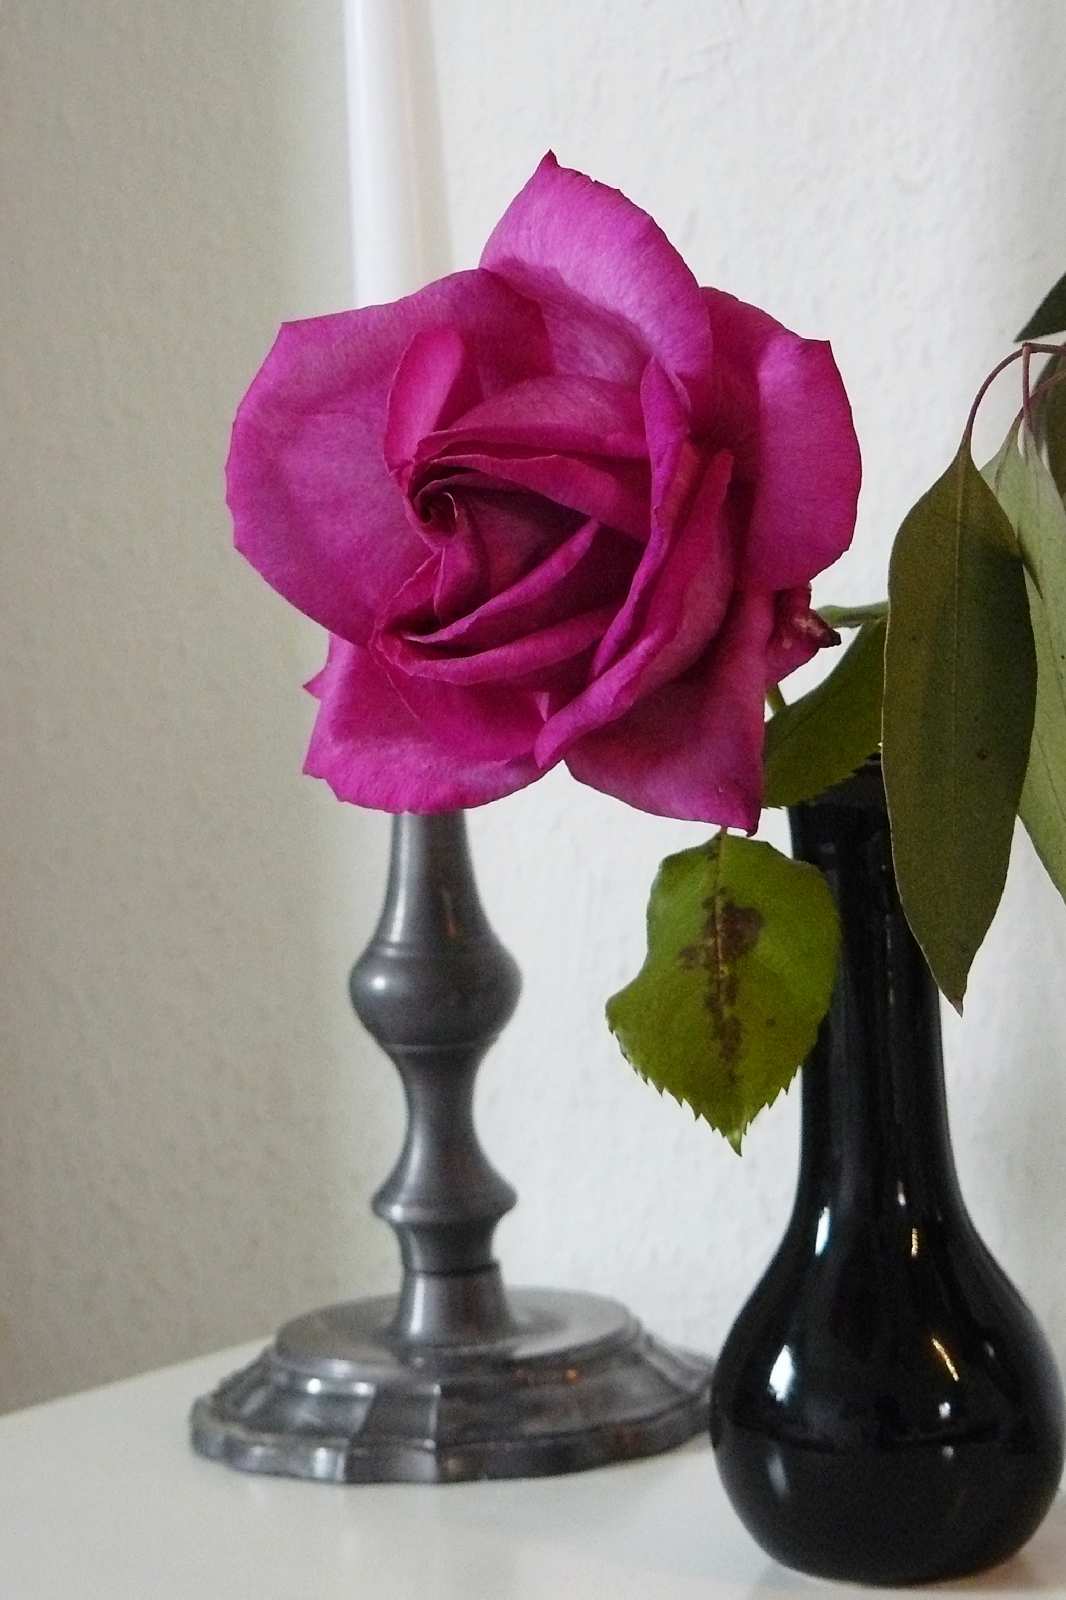 Rose 'Parole'